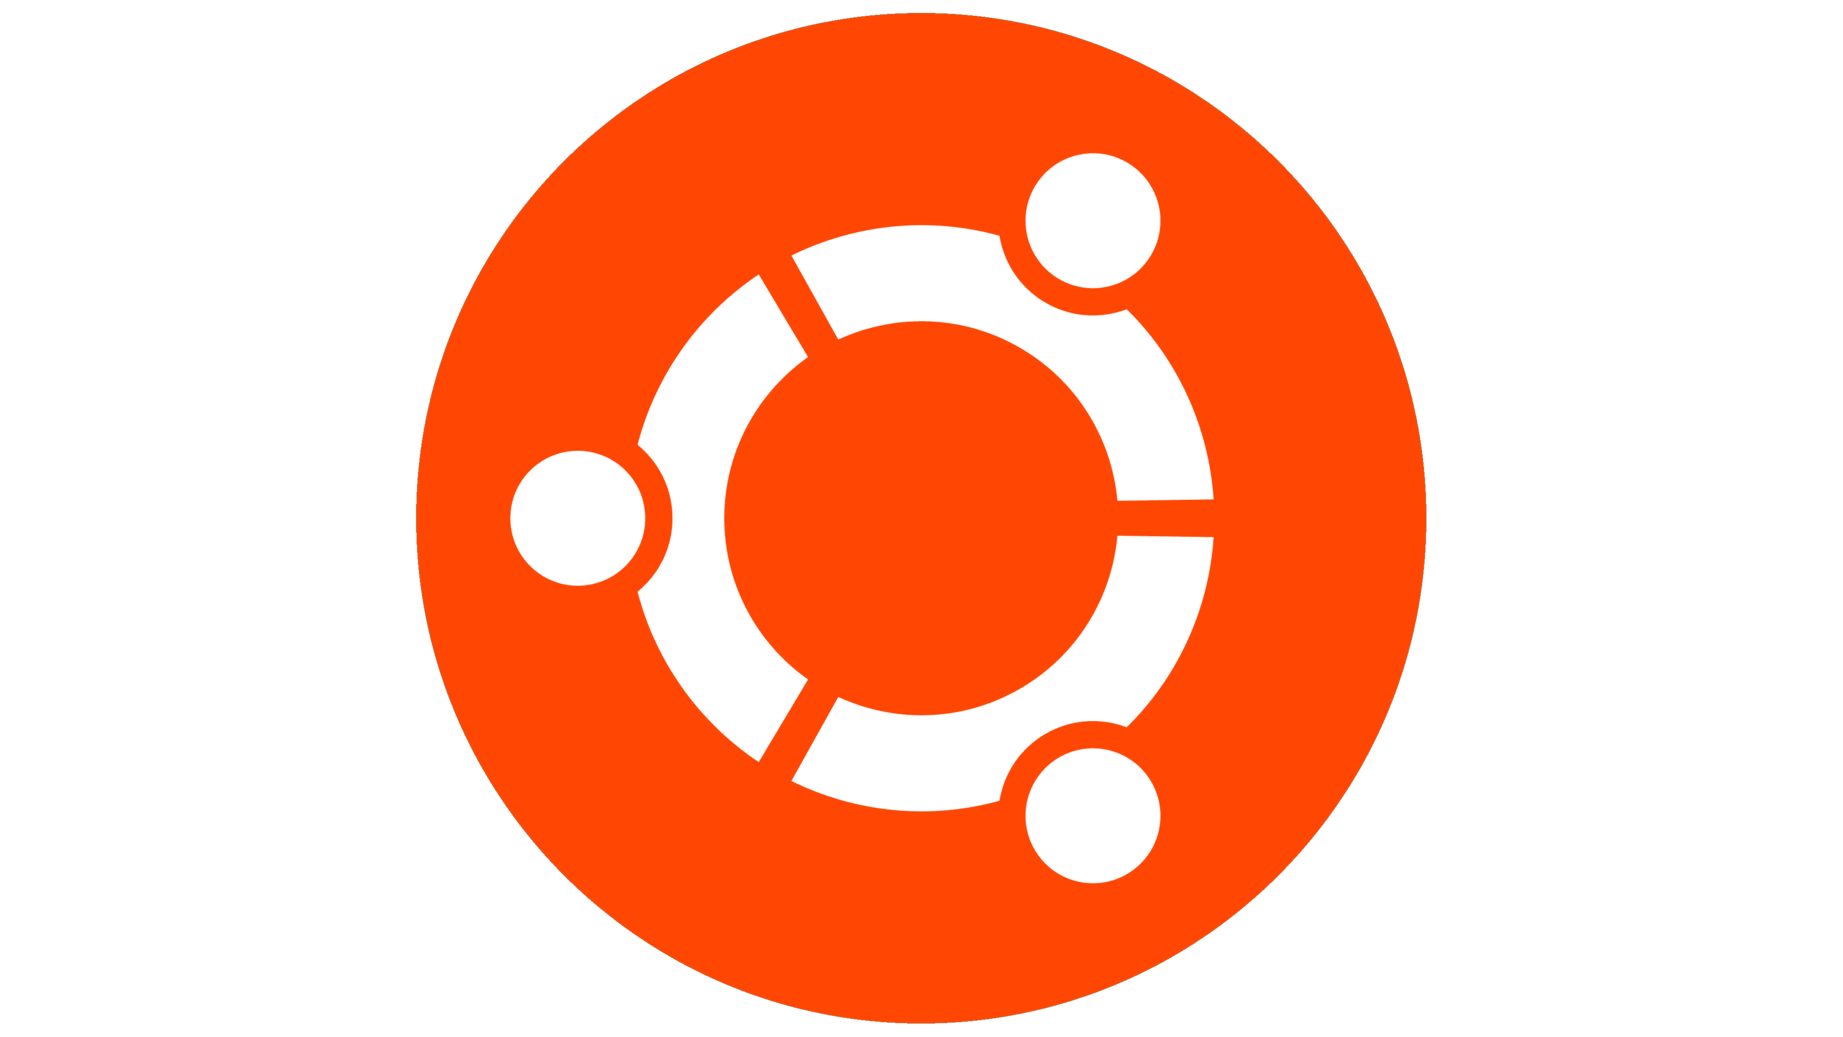 Ubuntu sign